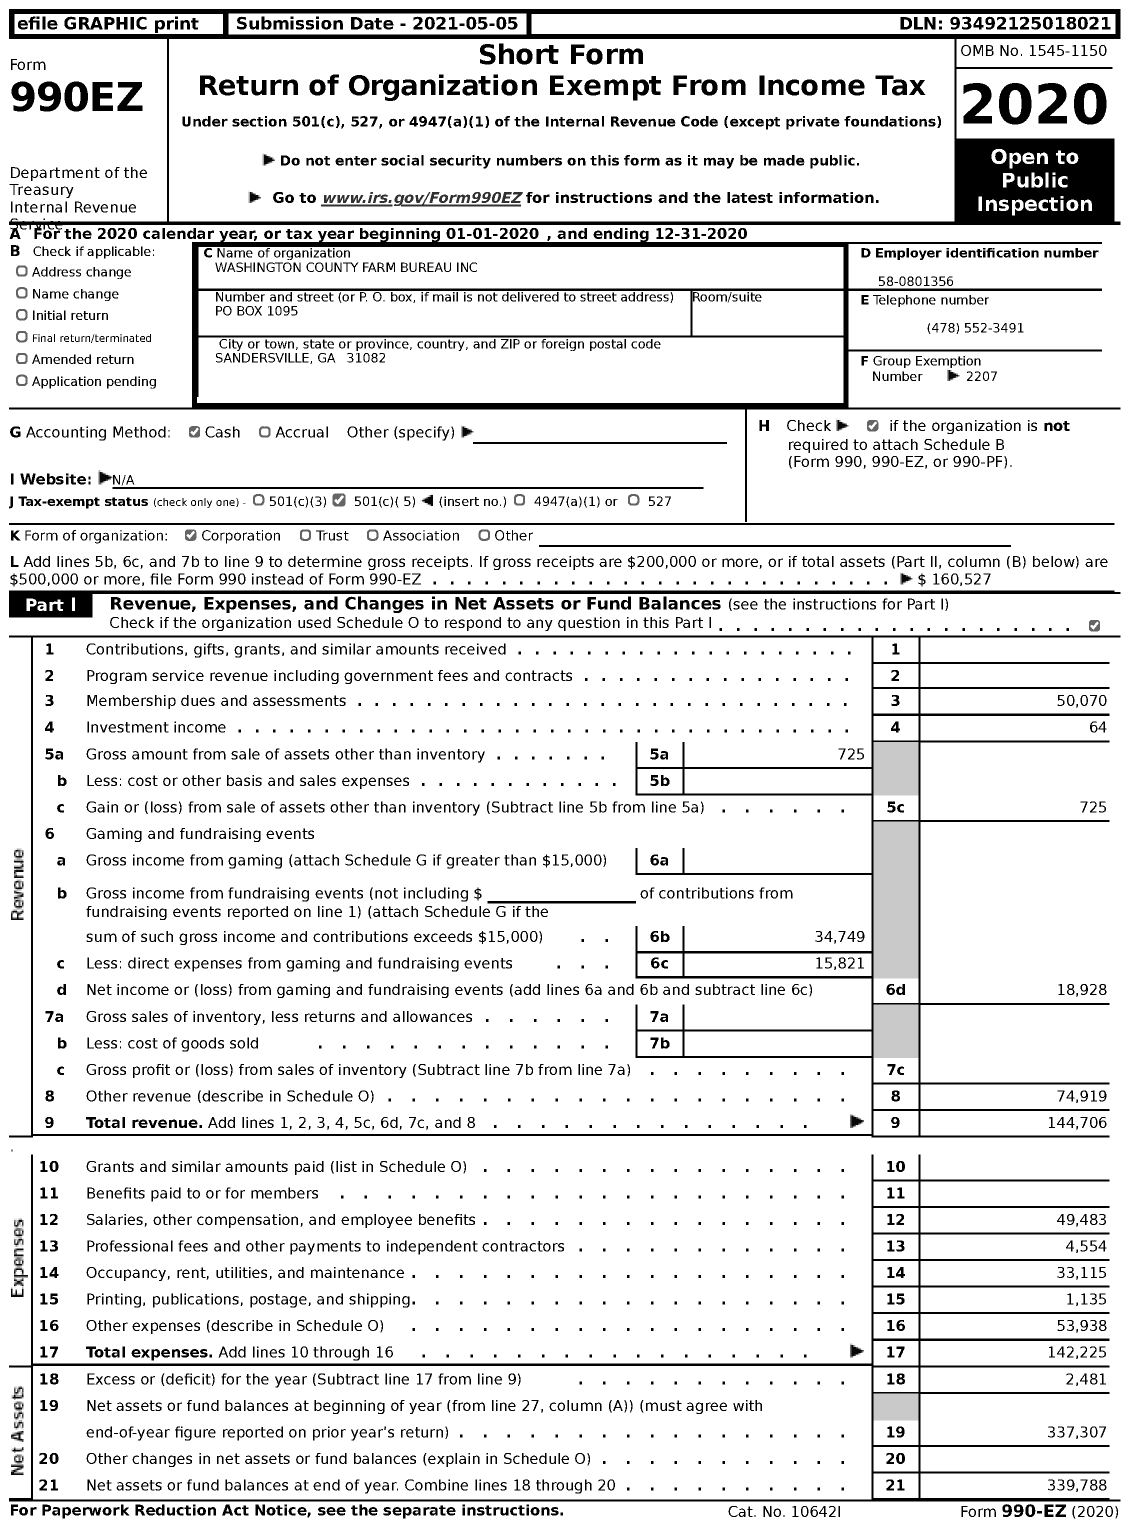 Image of first page of 2020 Form 990EZ for Georgia Farm Bureau Federation - Washington County Farm Bureau